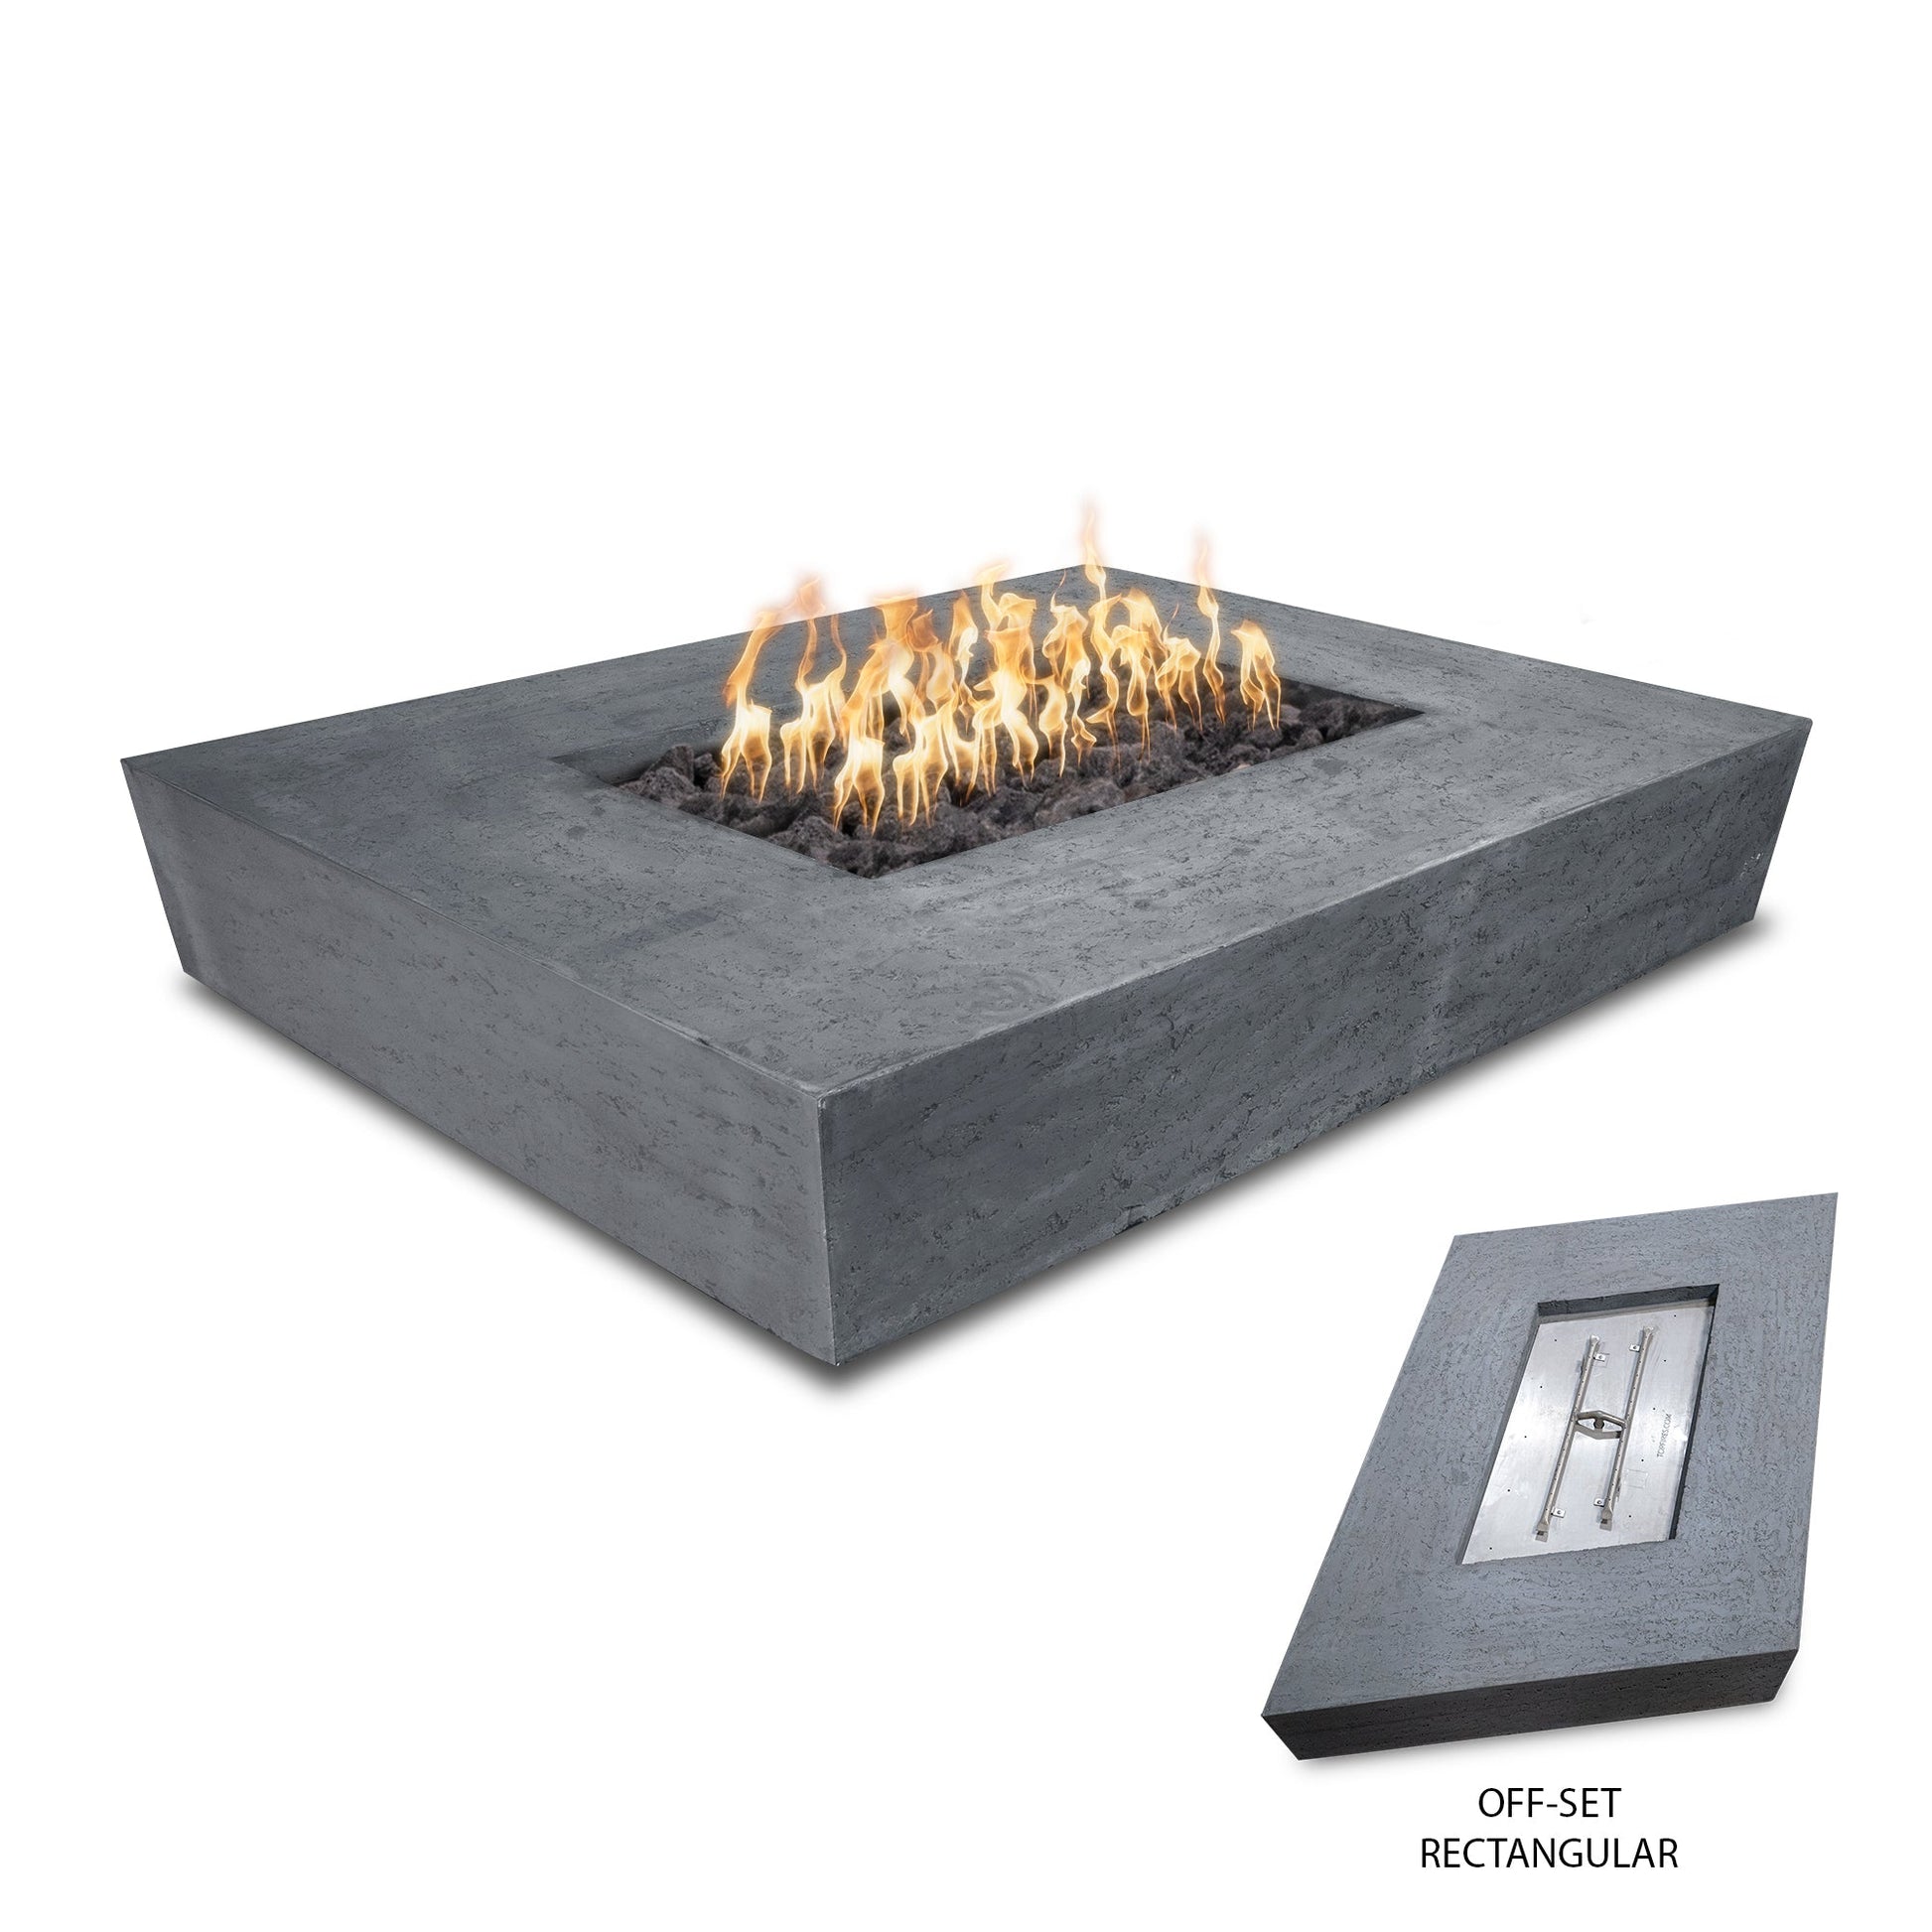 The Outdoor Plus Rectangular Heiko 58" Metallic Copper GFRC Concrete Liquid Propane Fire Pit with Match Lit Ignition